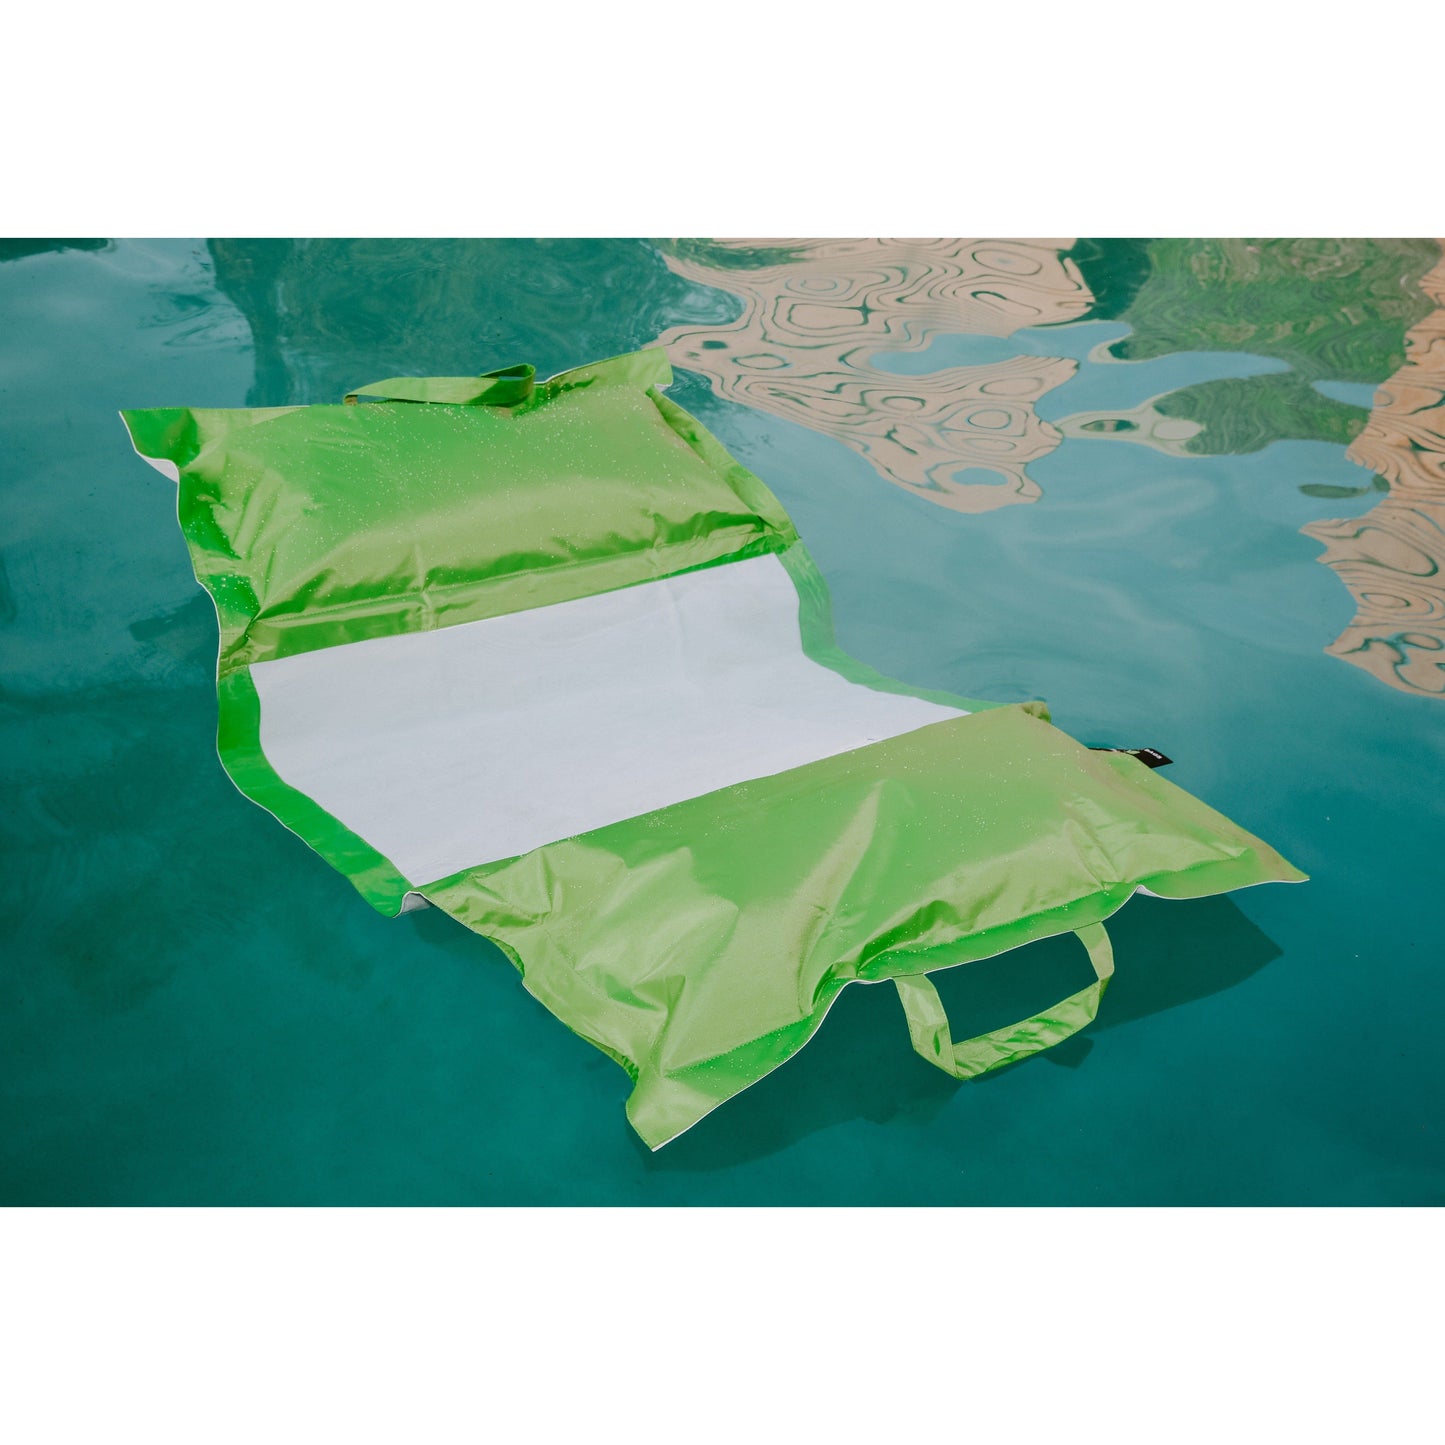 Water Lounger floating pool bean bag green